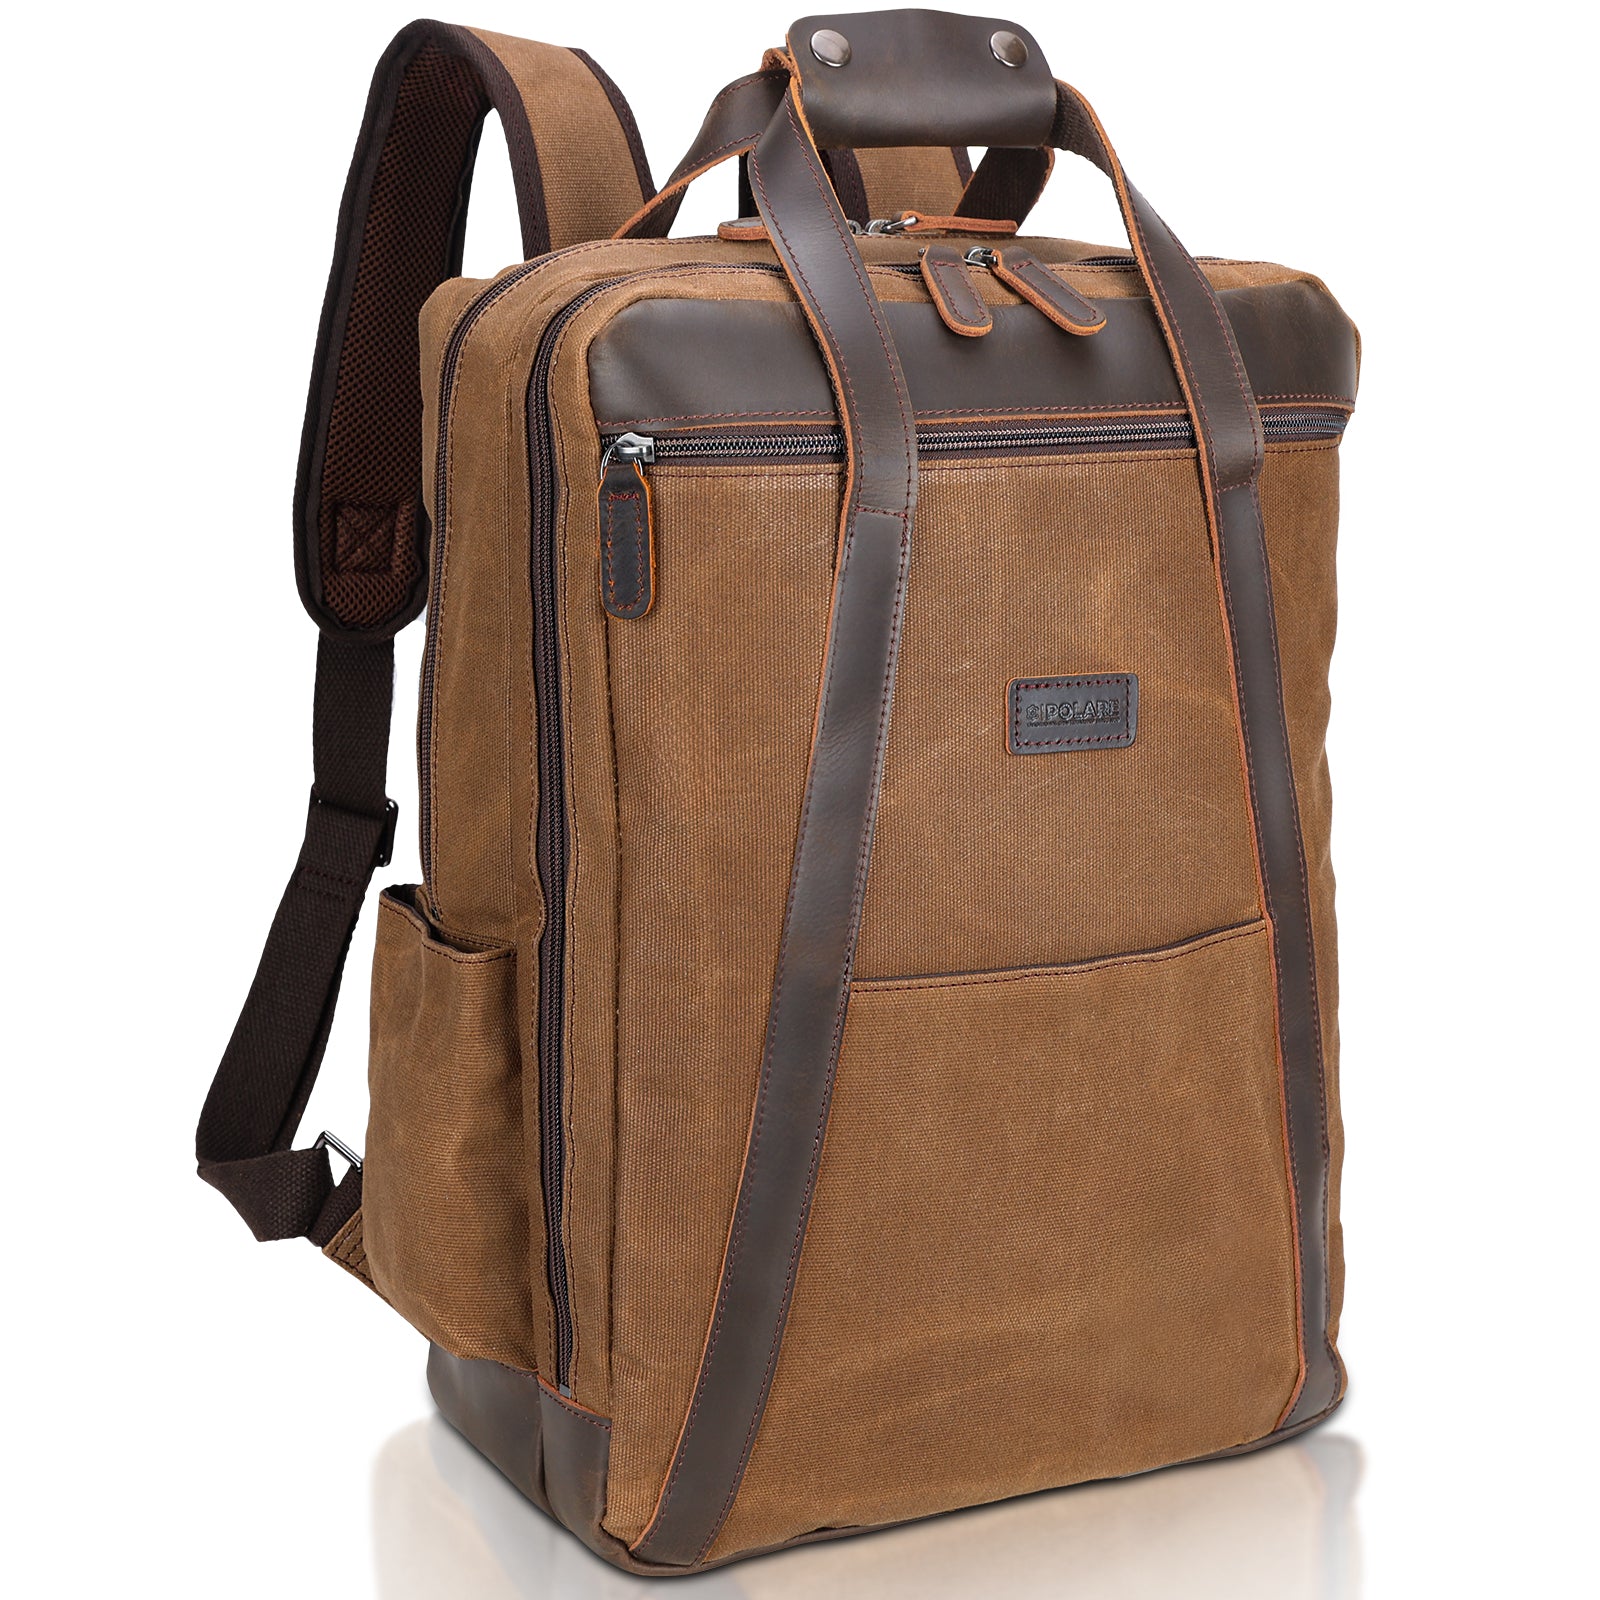 Full Grain Leather Trim Waxed Canvas Travel Backpack Waterproof Daypack